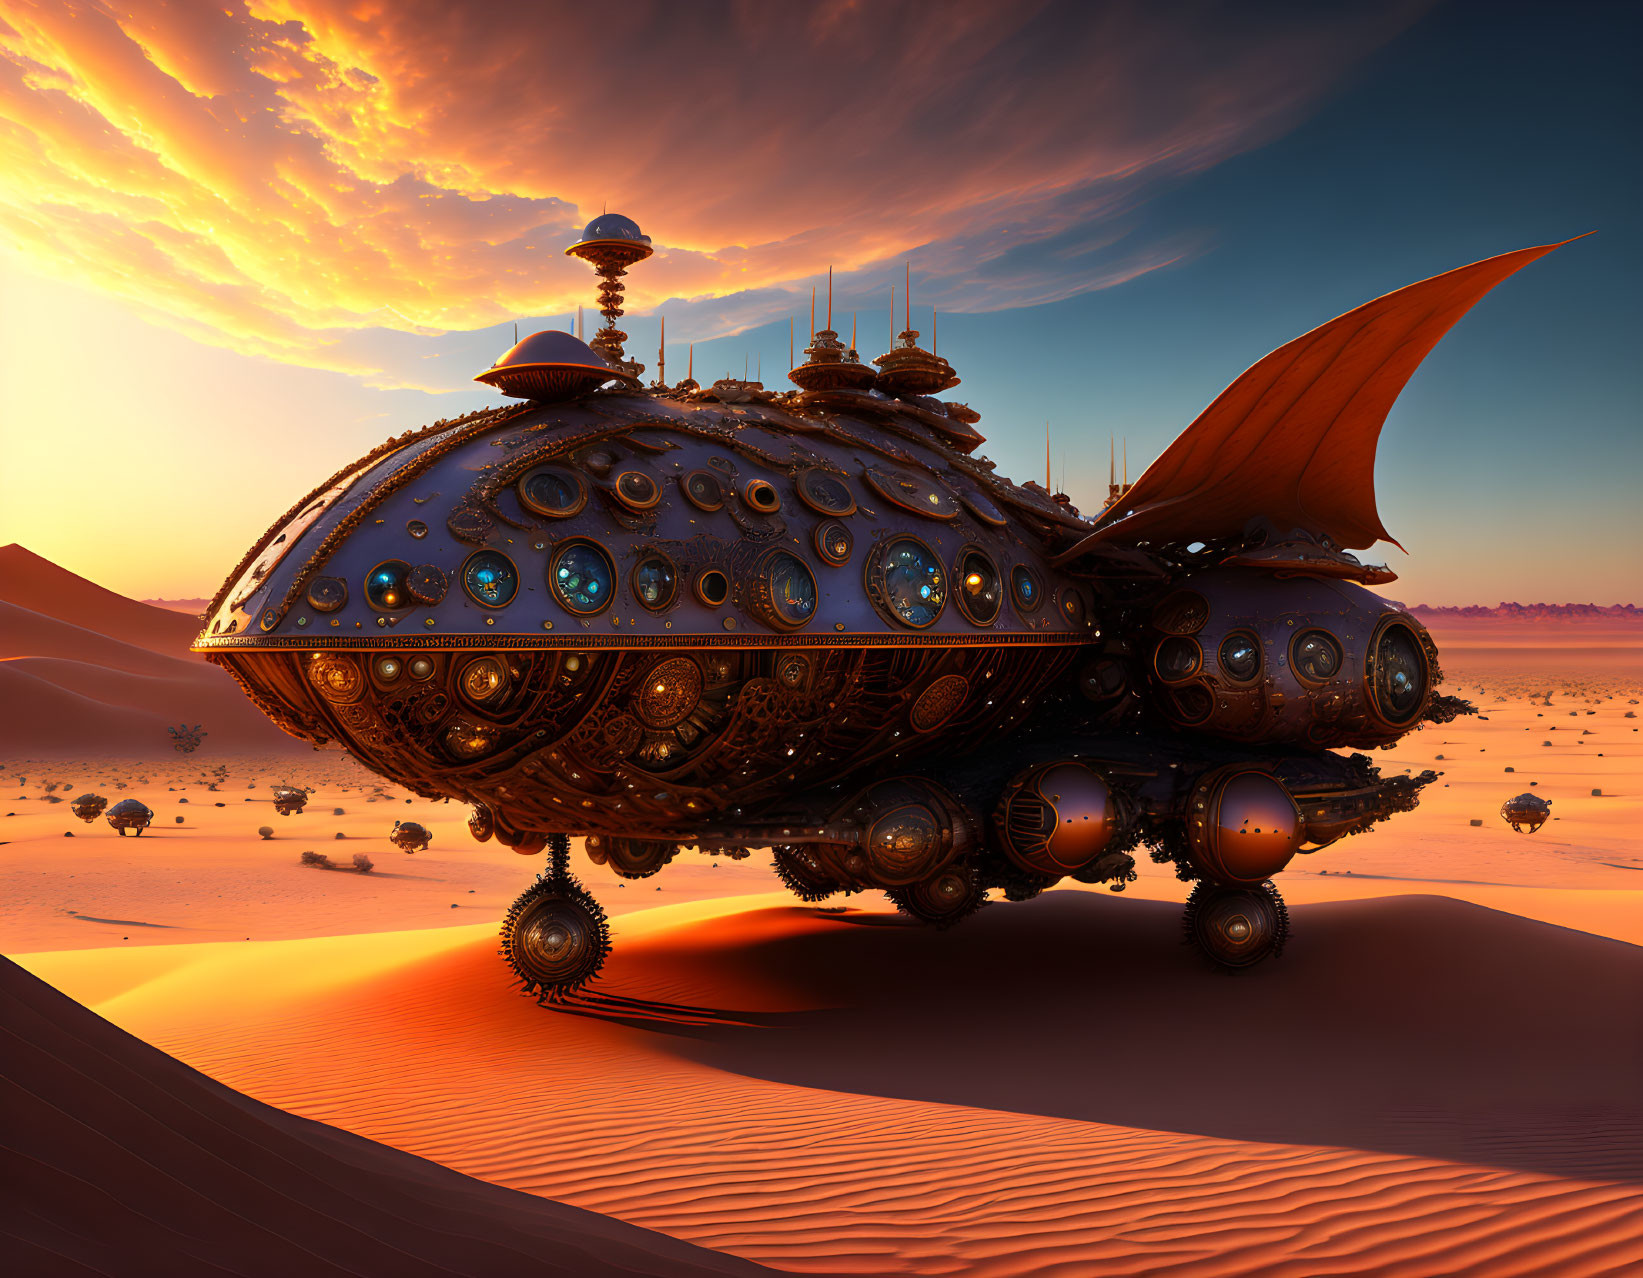 Ornate futuristic airship on desert dune at sunset